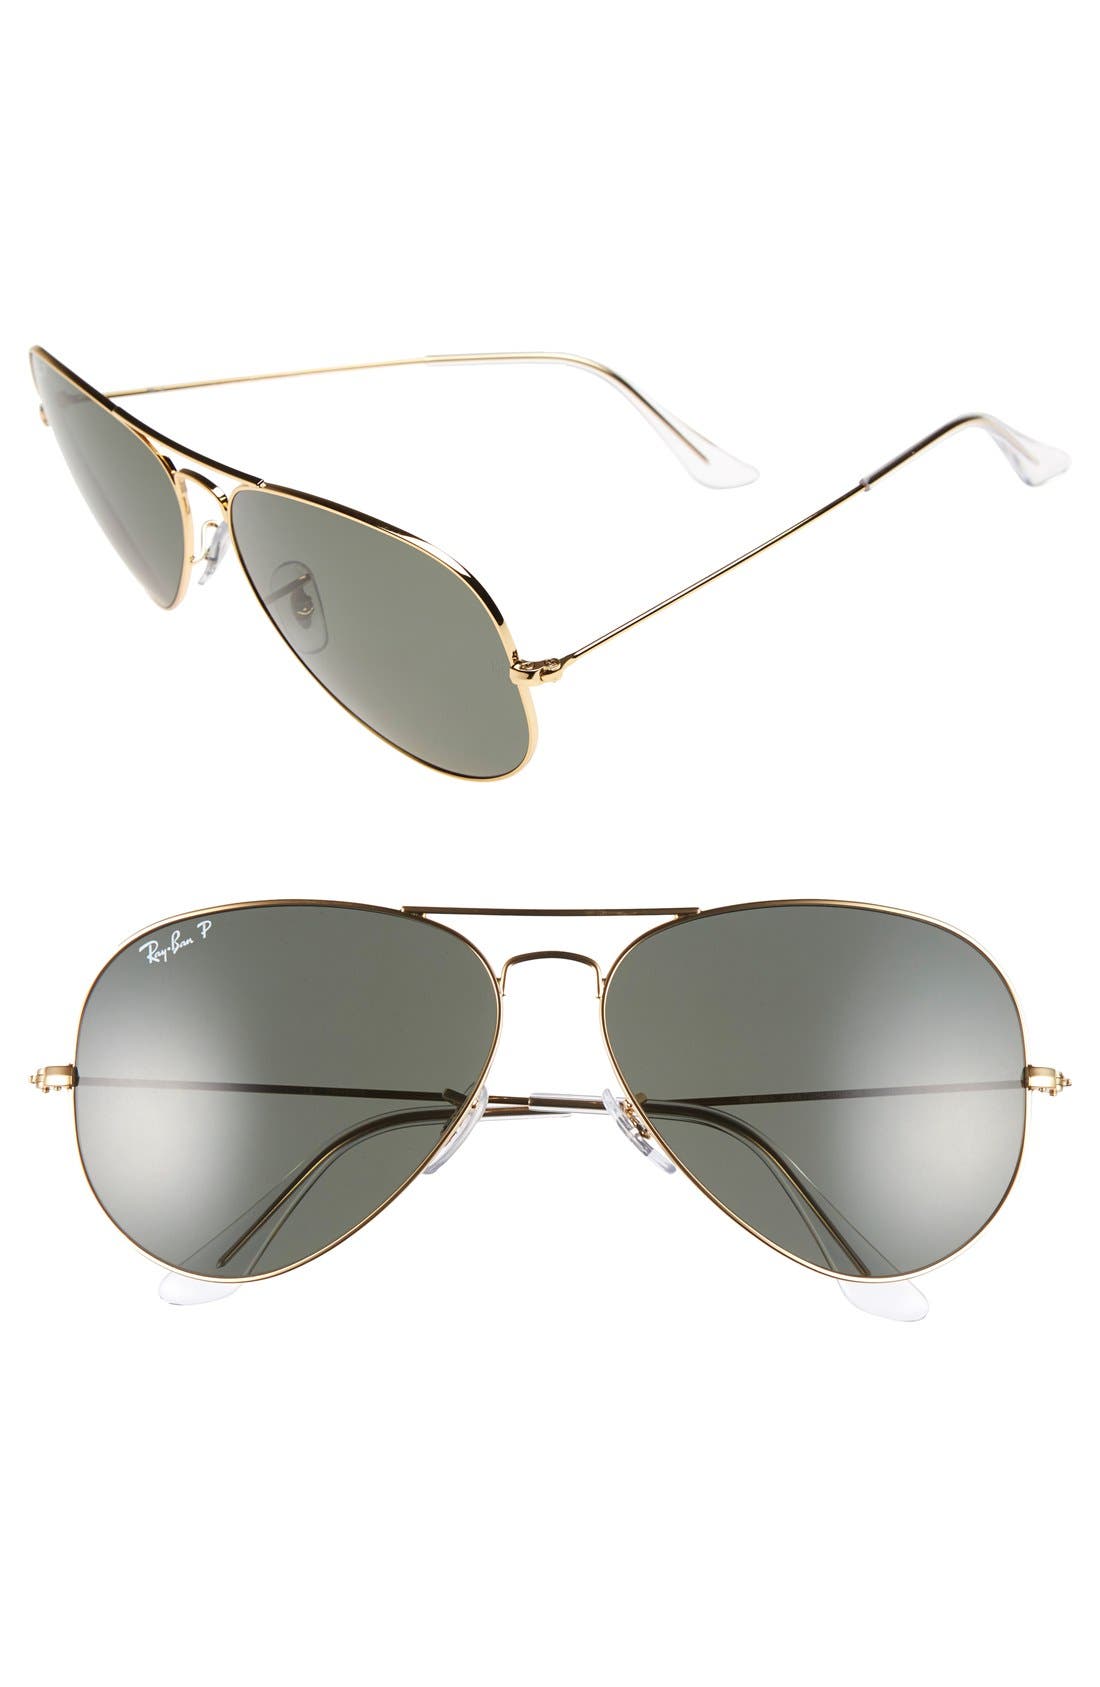 ray ban aviator polarized sunglasses sale